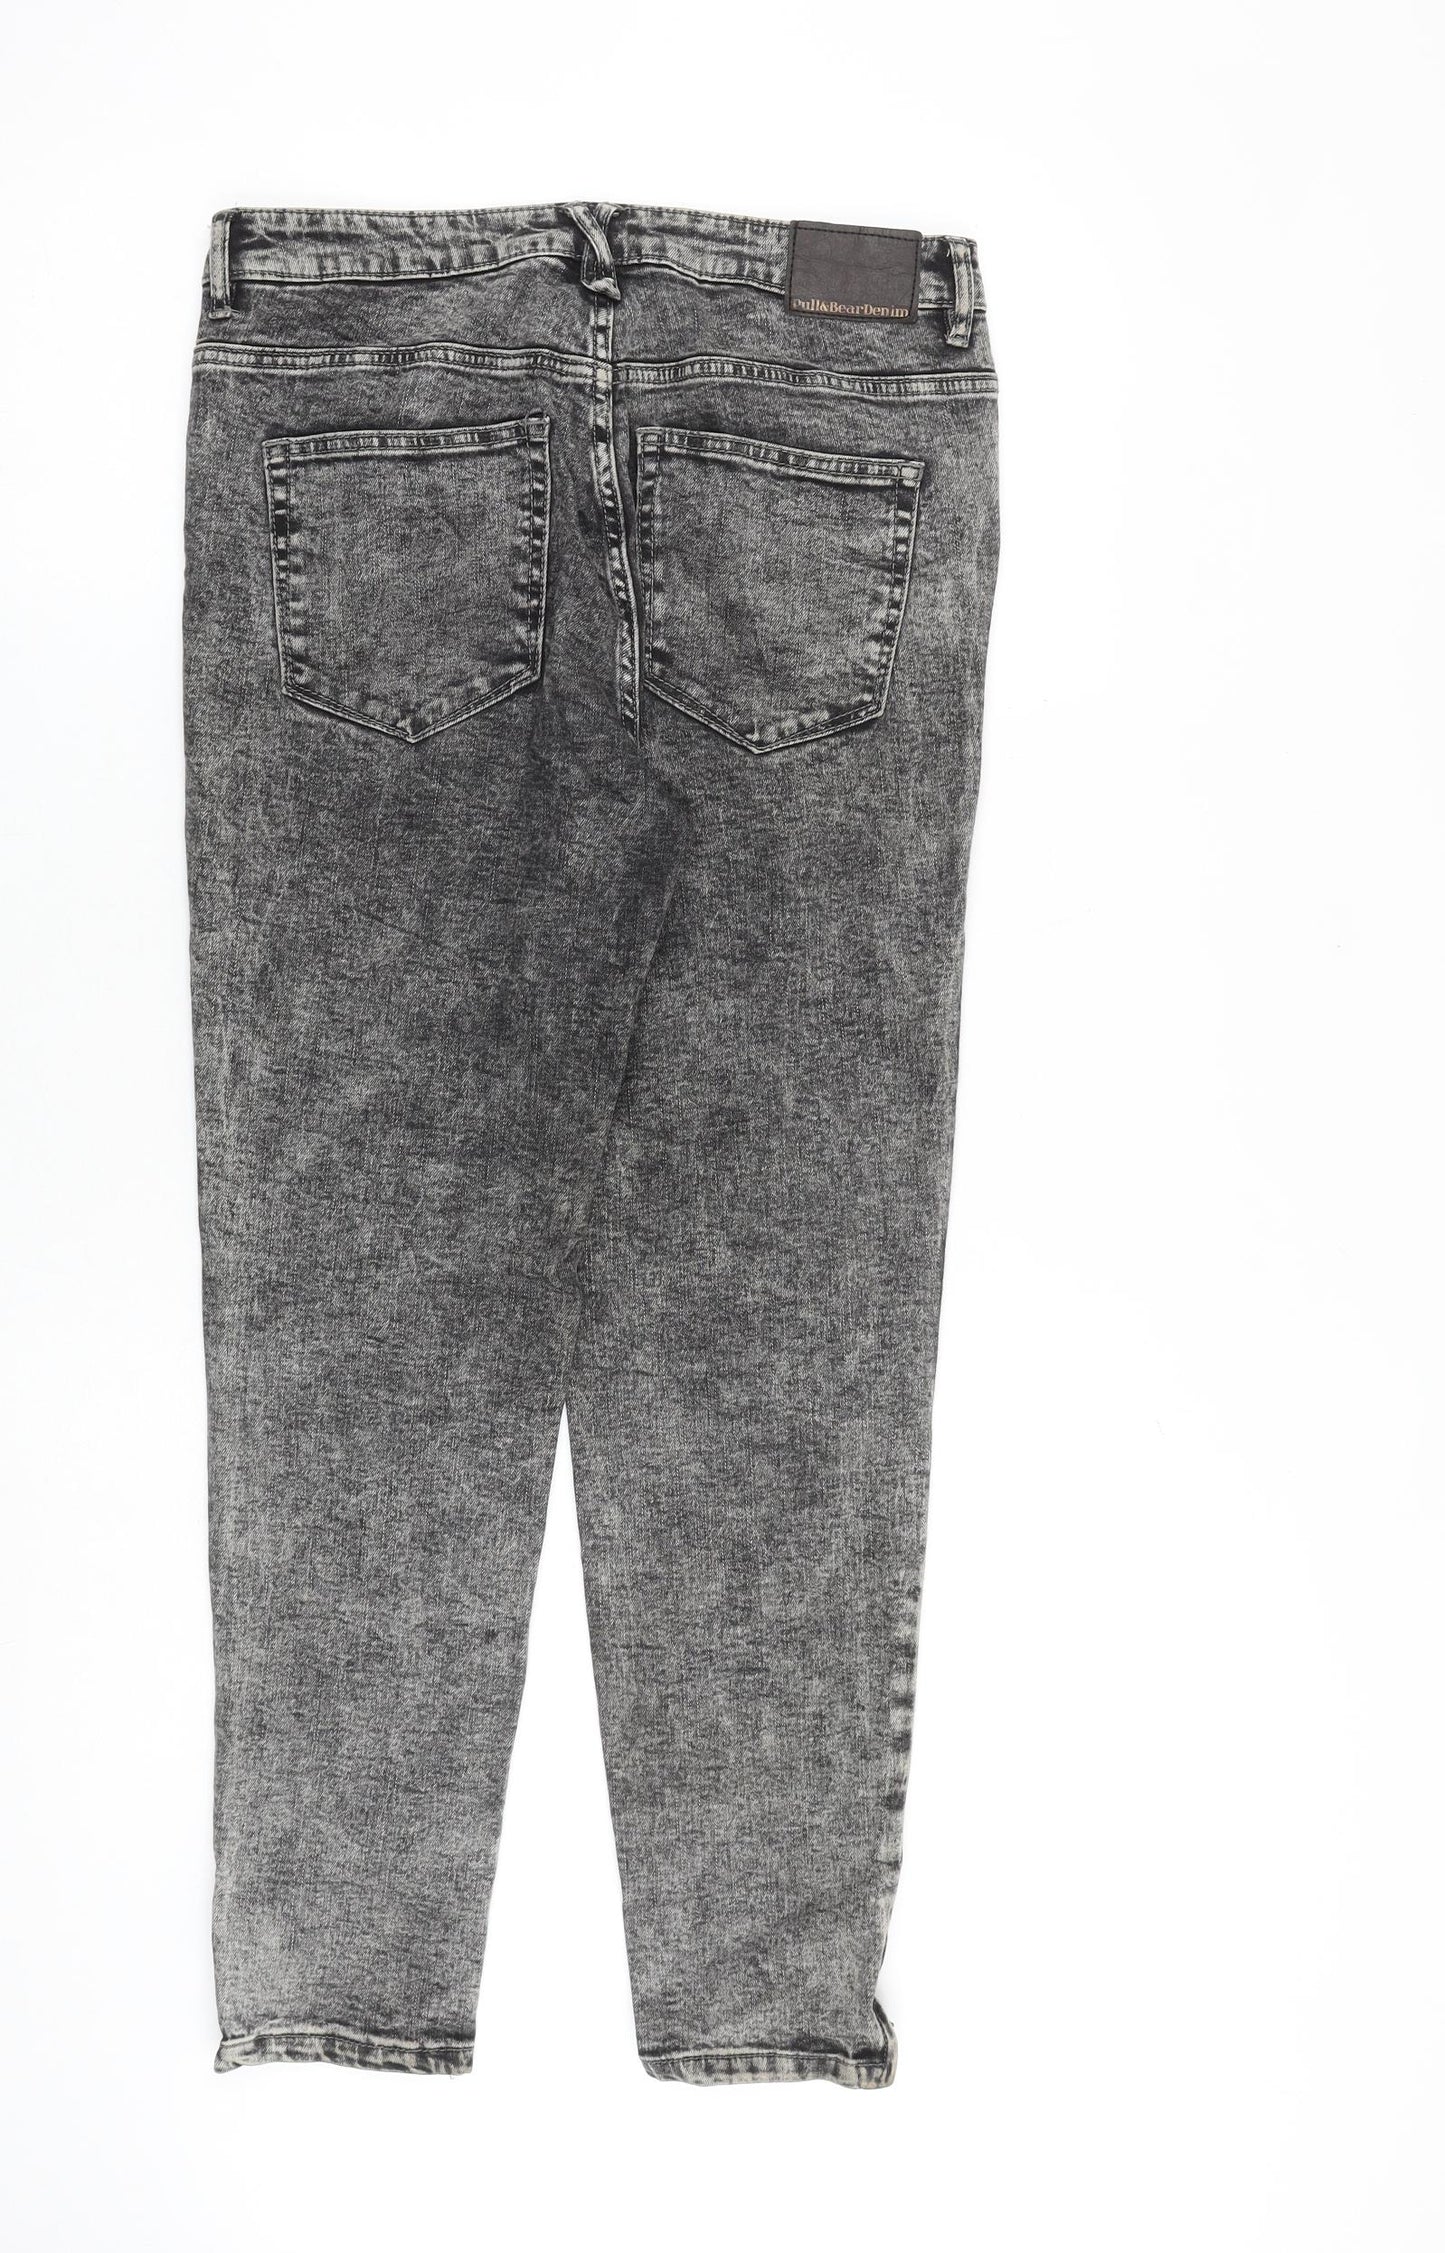 Pull&Bear Womens Grey Cotton Skinny Jeans Size 12 L27 in Regular Zip - Acid Wash